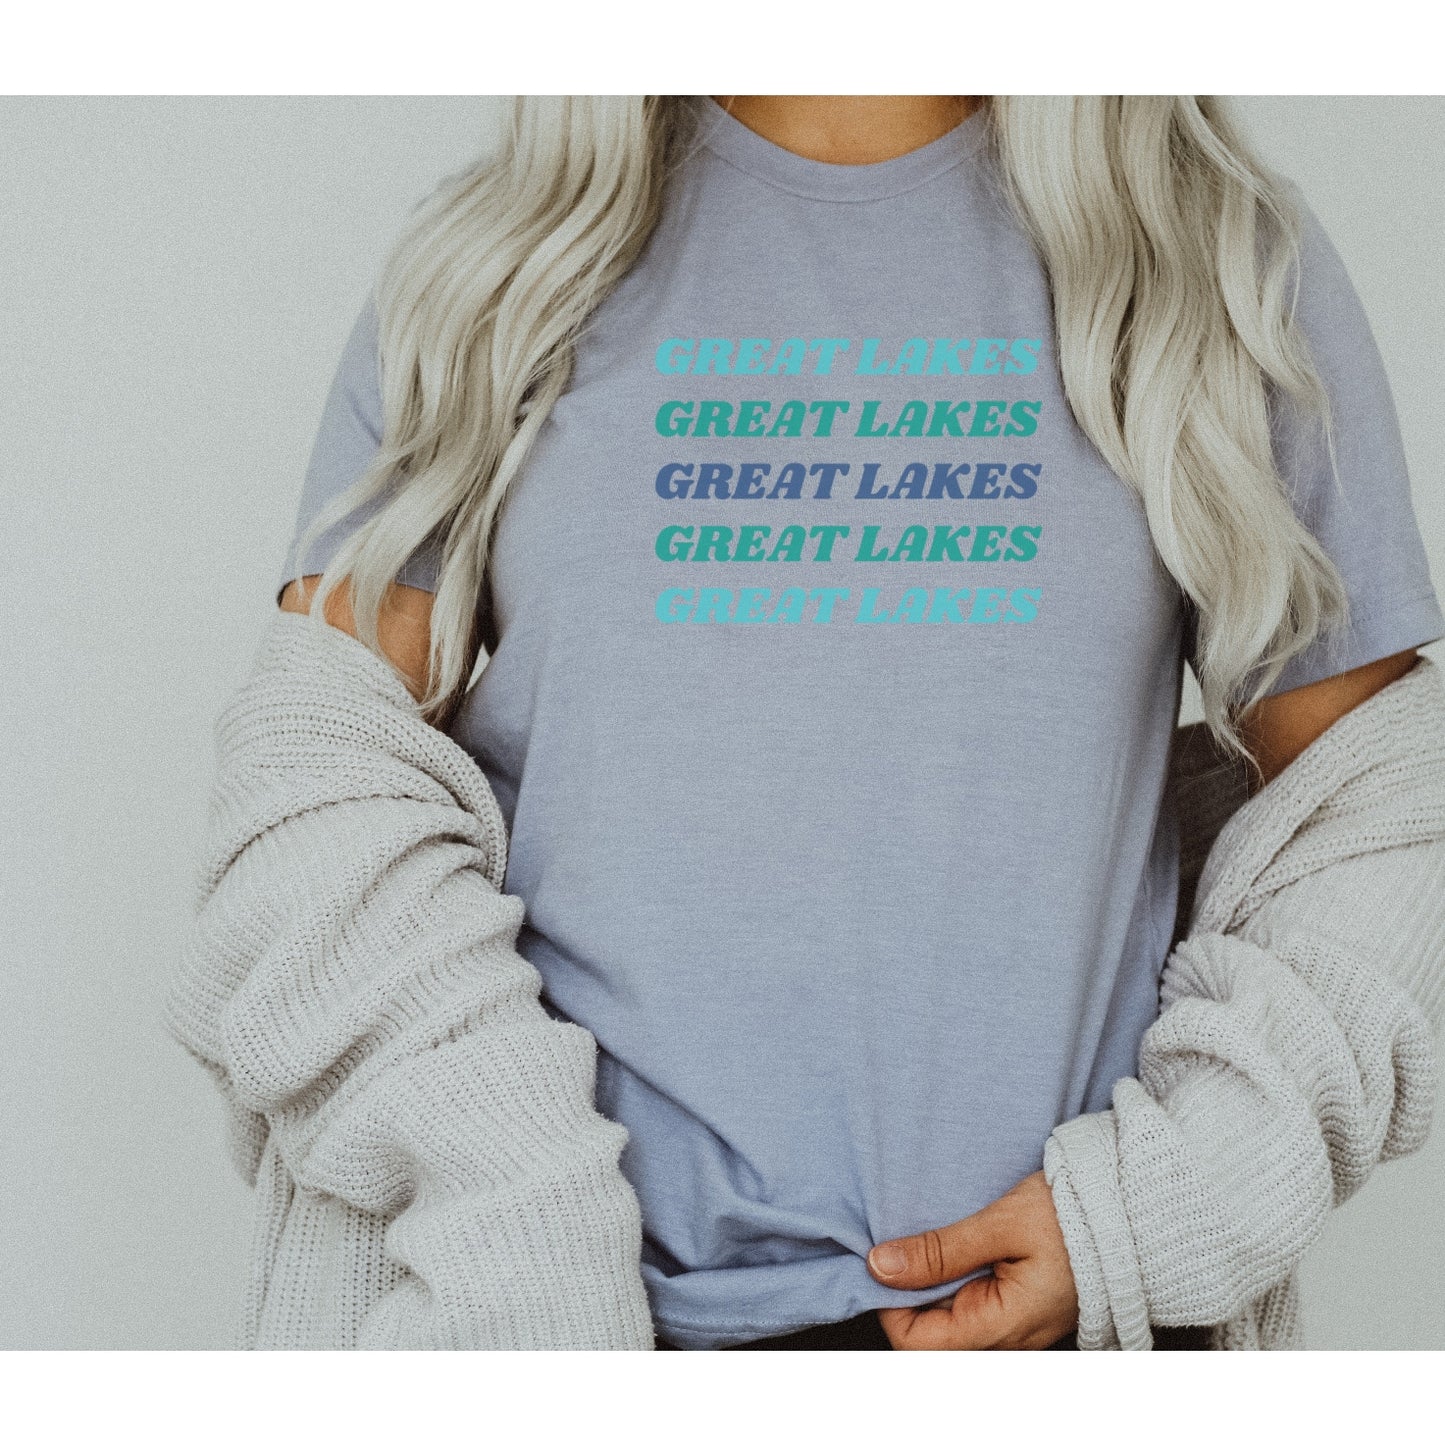 Great Lakes Repeating T-Shirt